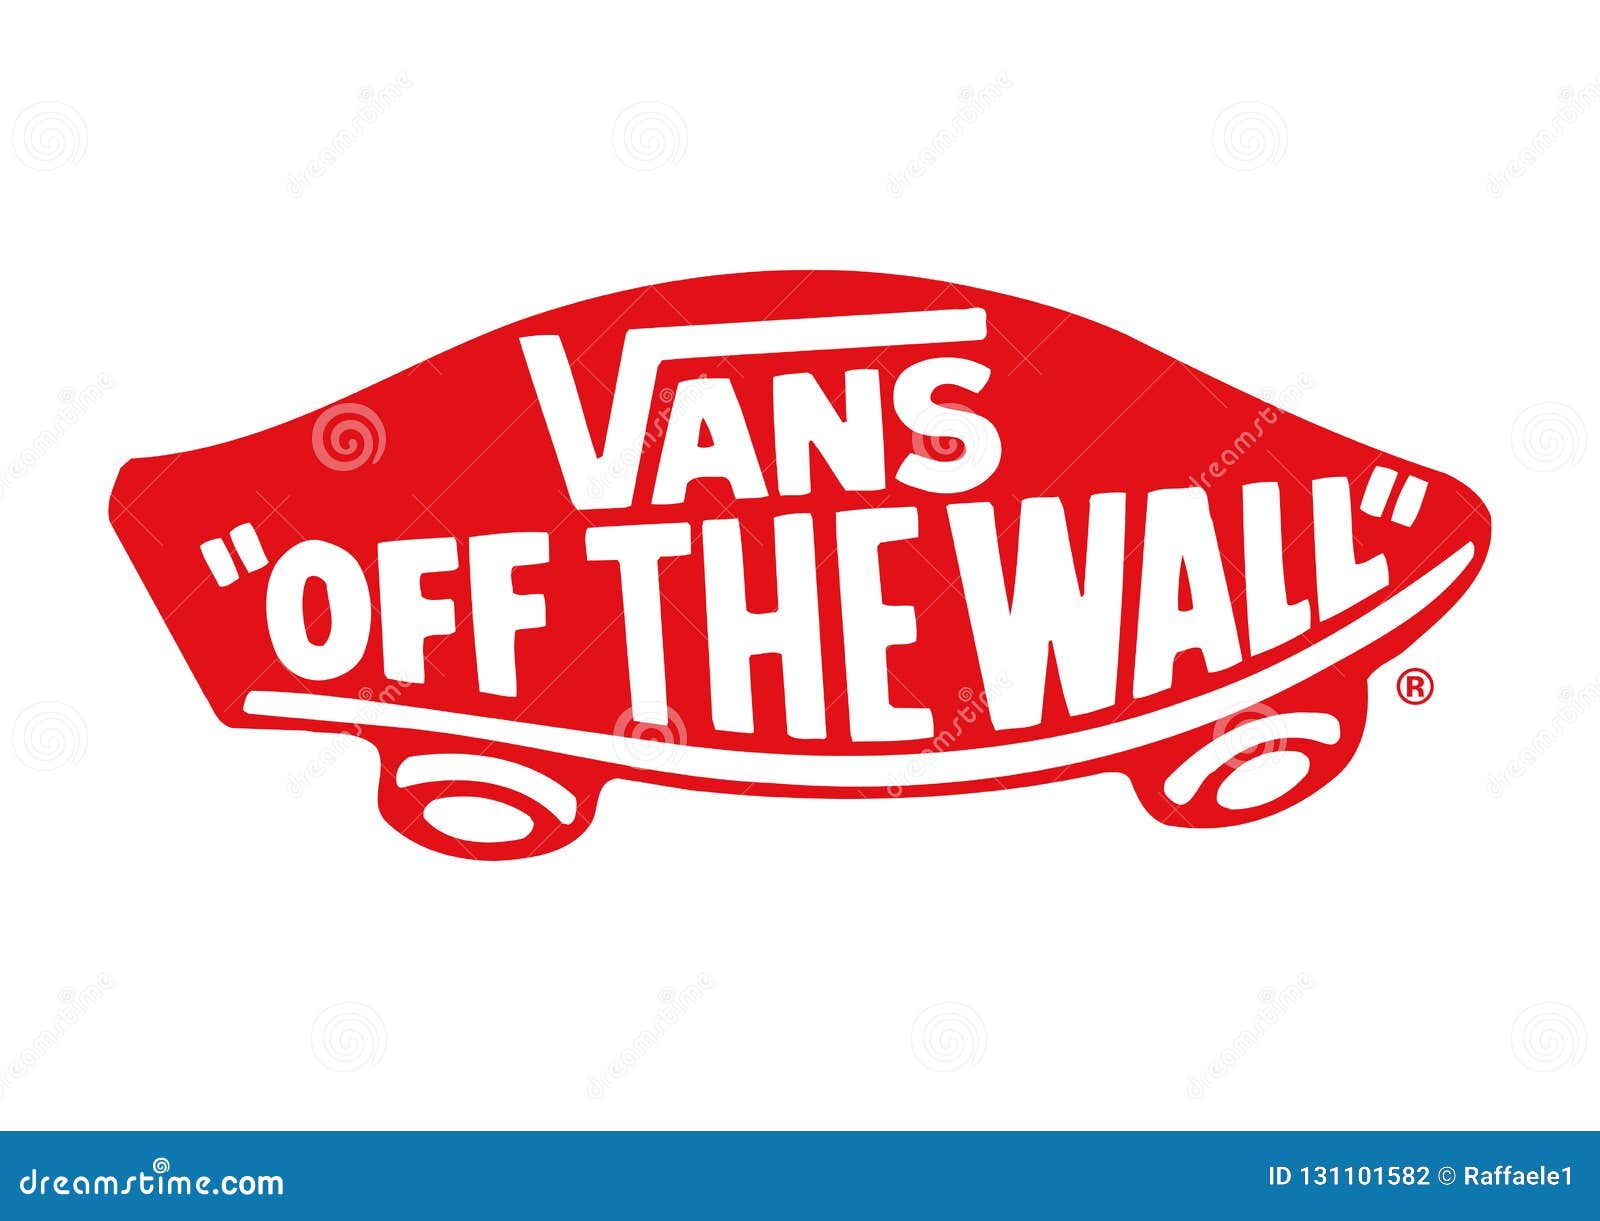 creator of vans off the wall